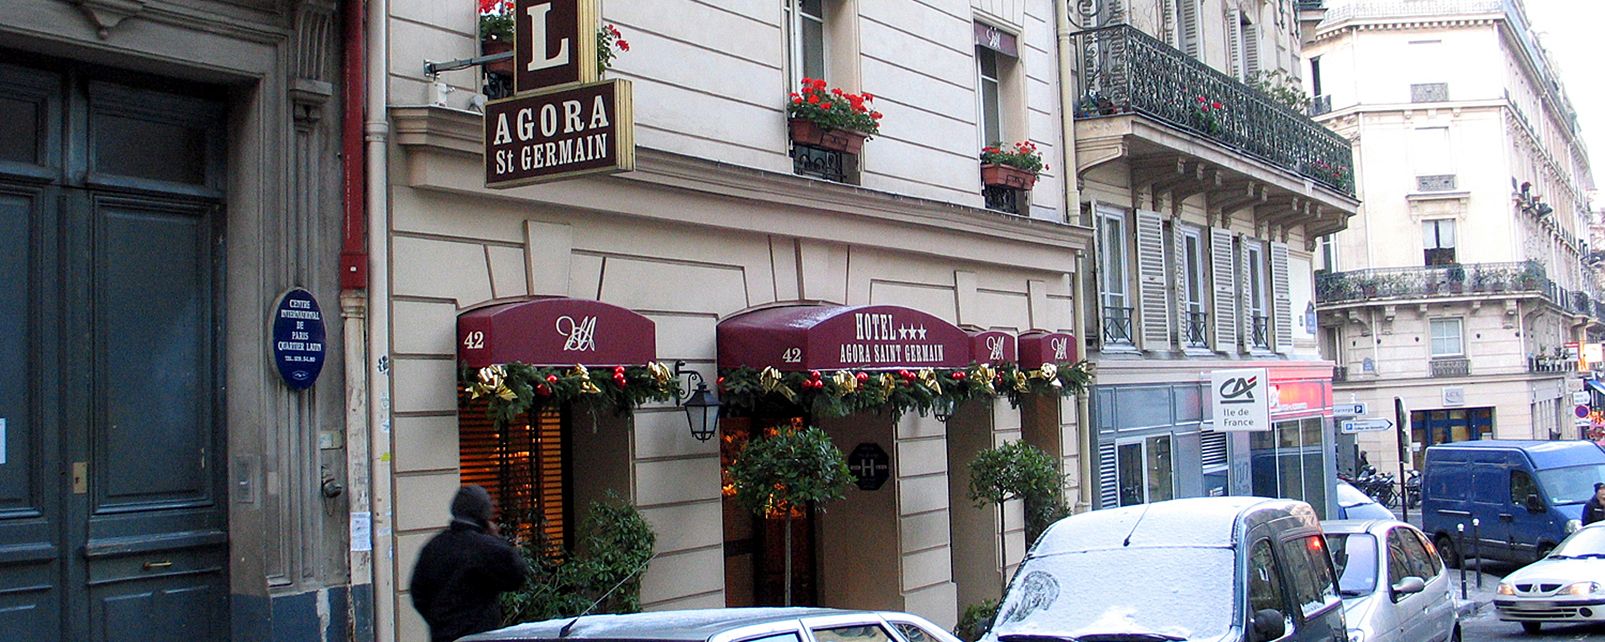 Hotel Agora St Germain